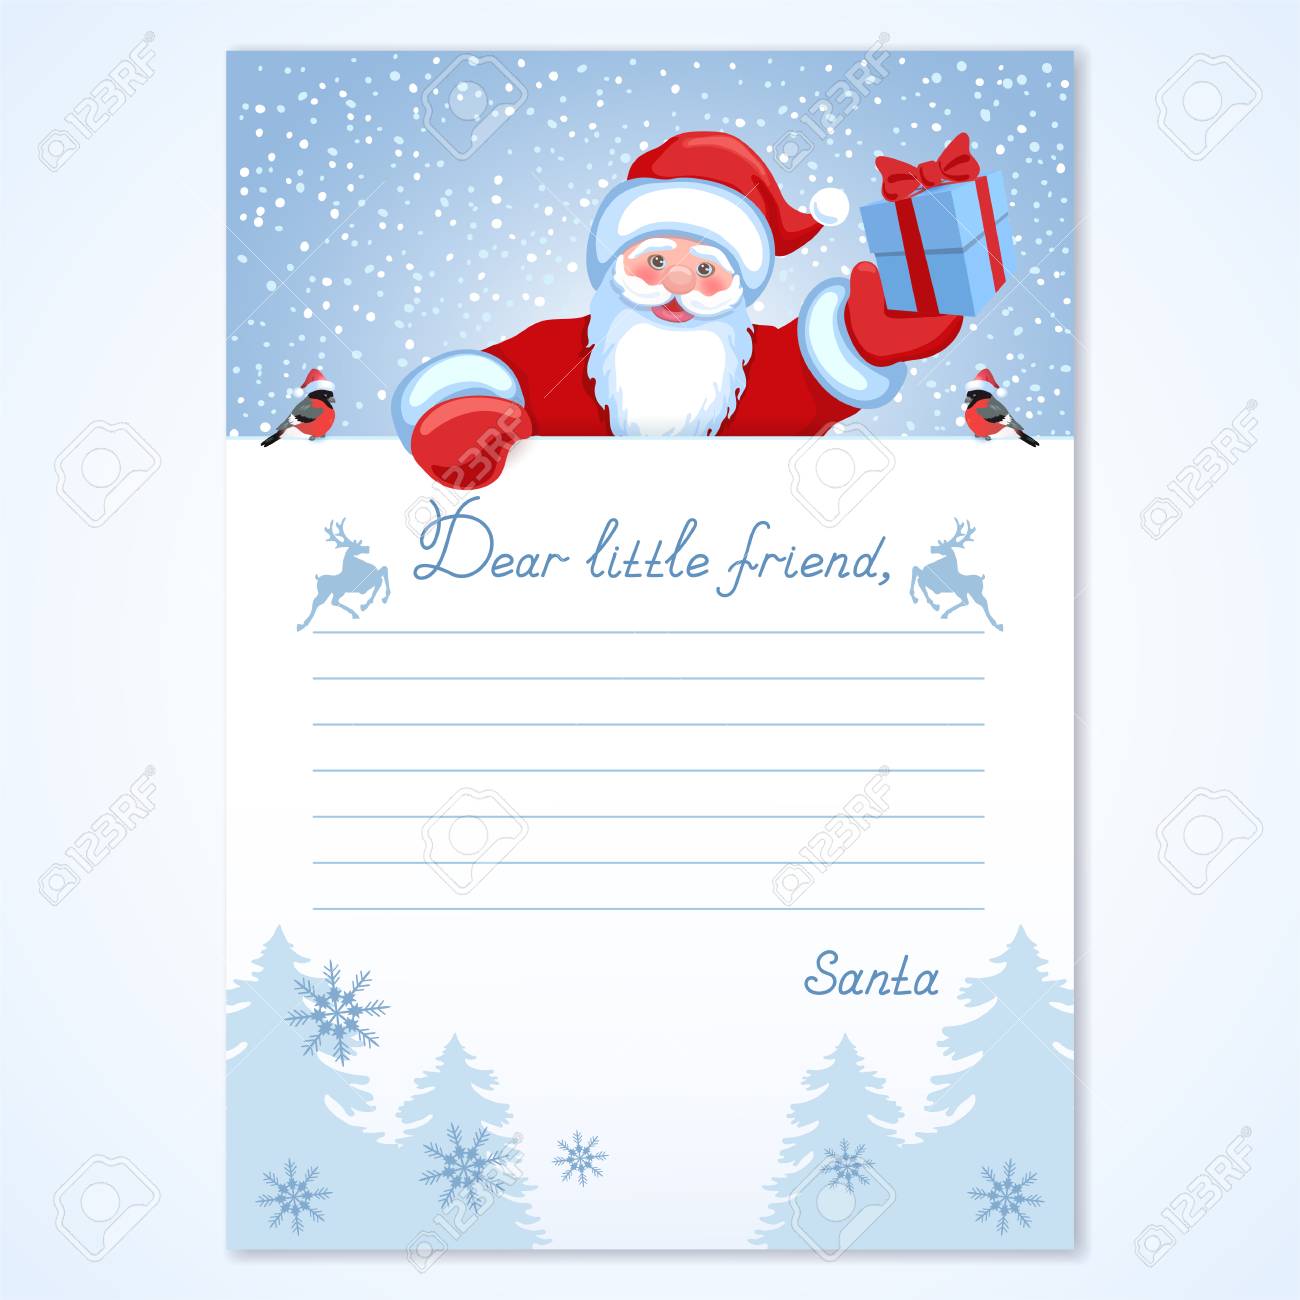 Note from Santa 